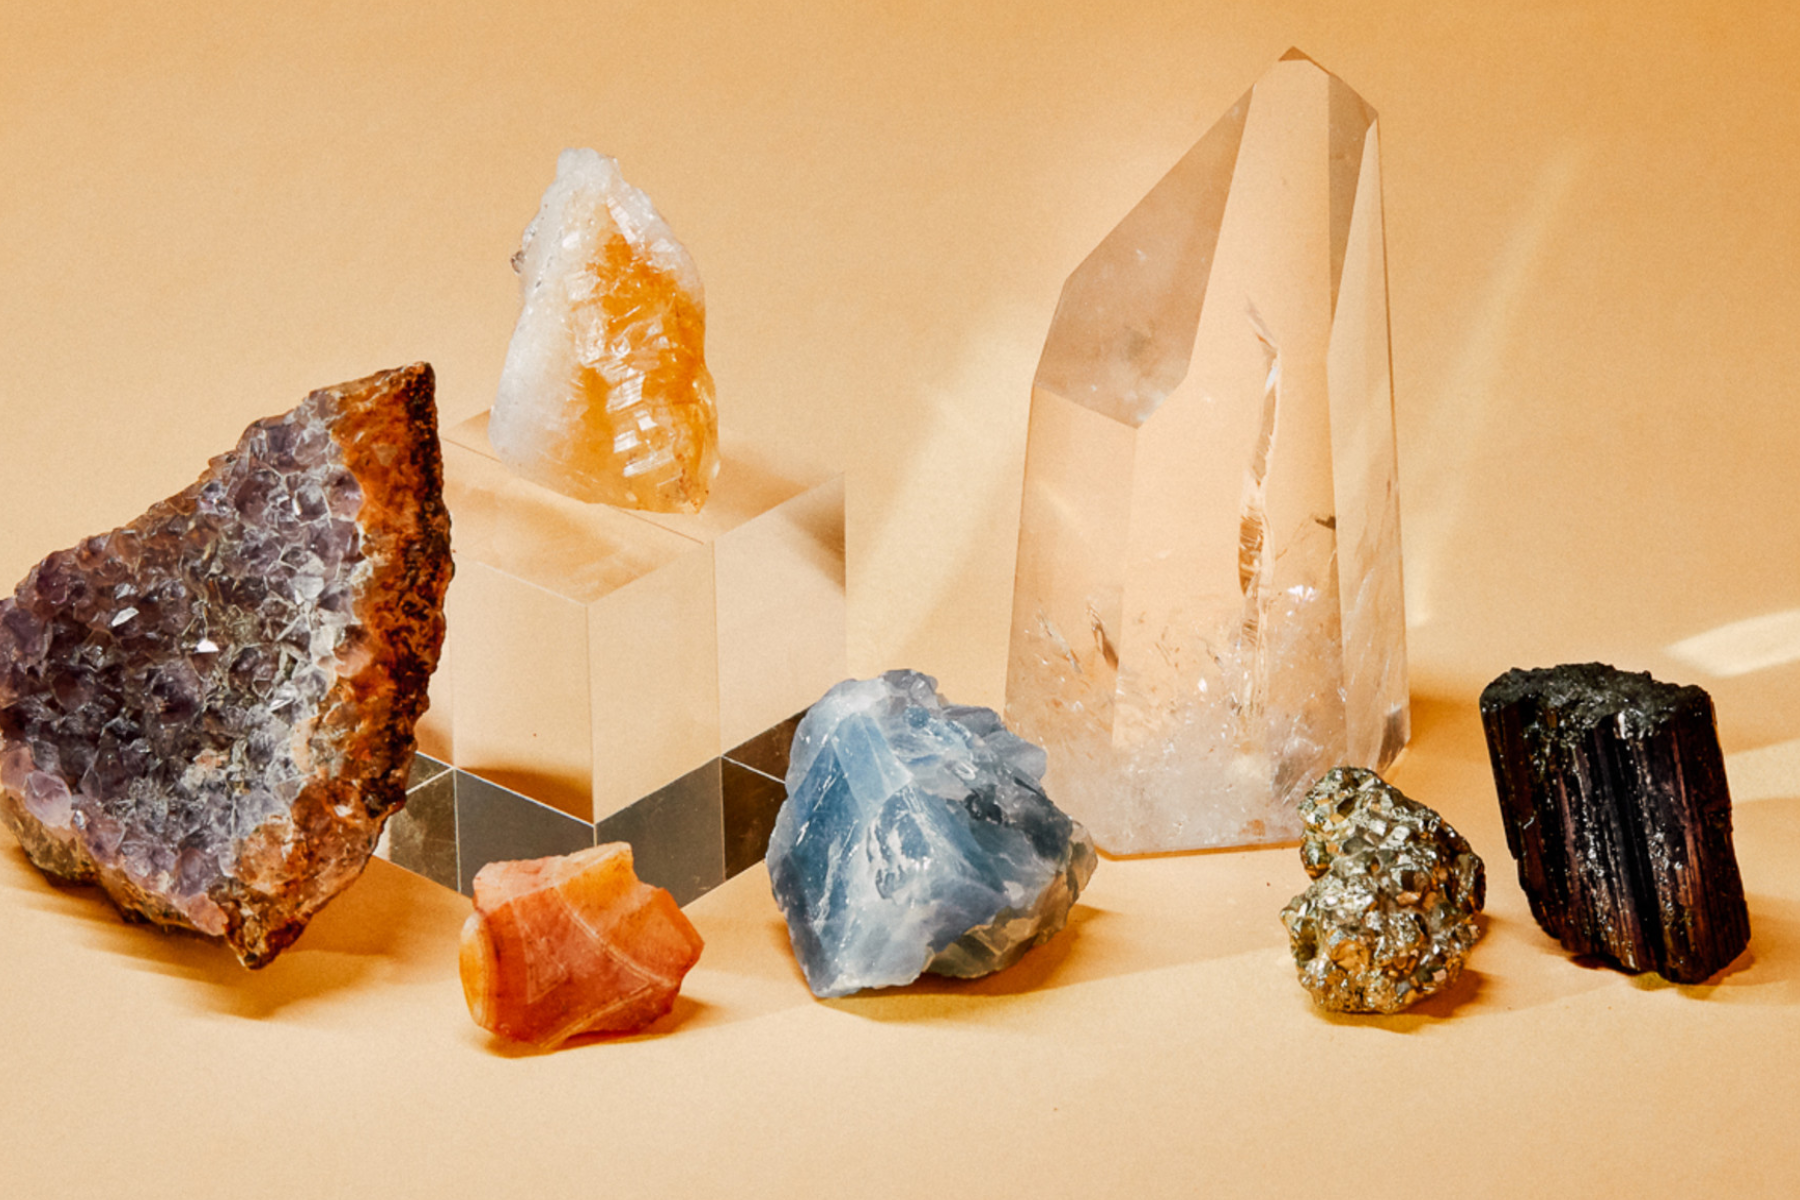 A total of seven distinct gemstones